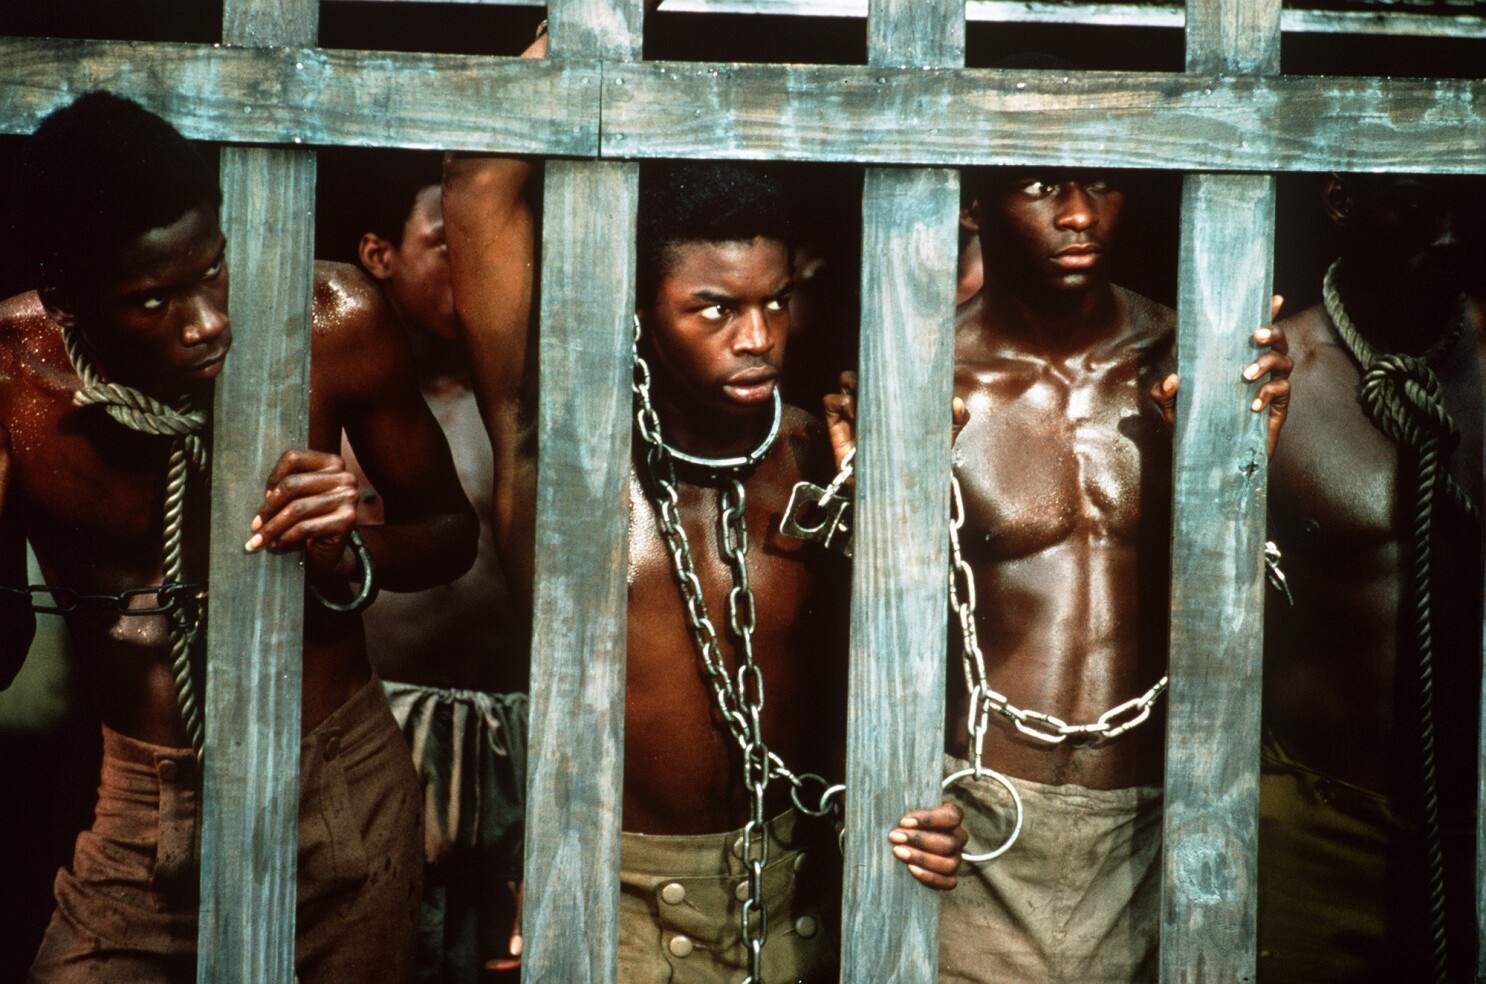 Prison slave